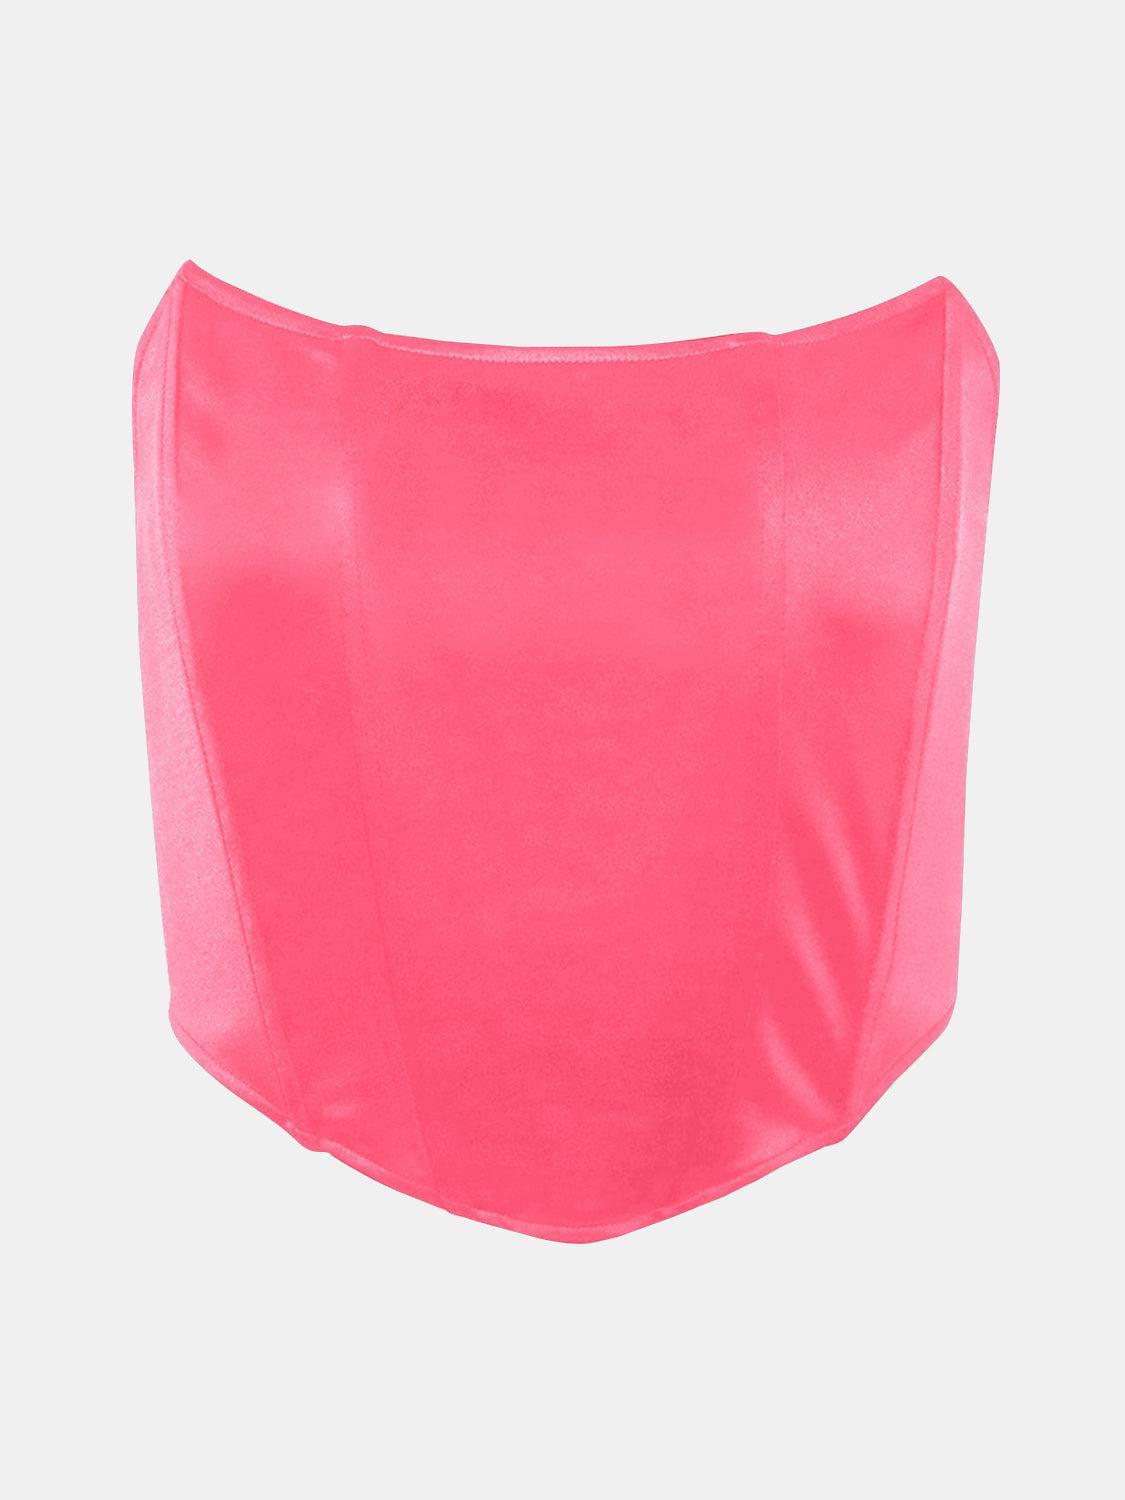 a woman wearing a pink bikini top